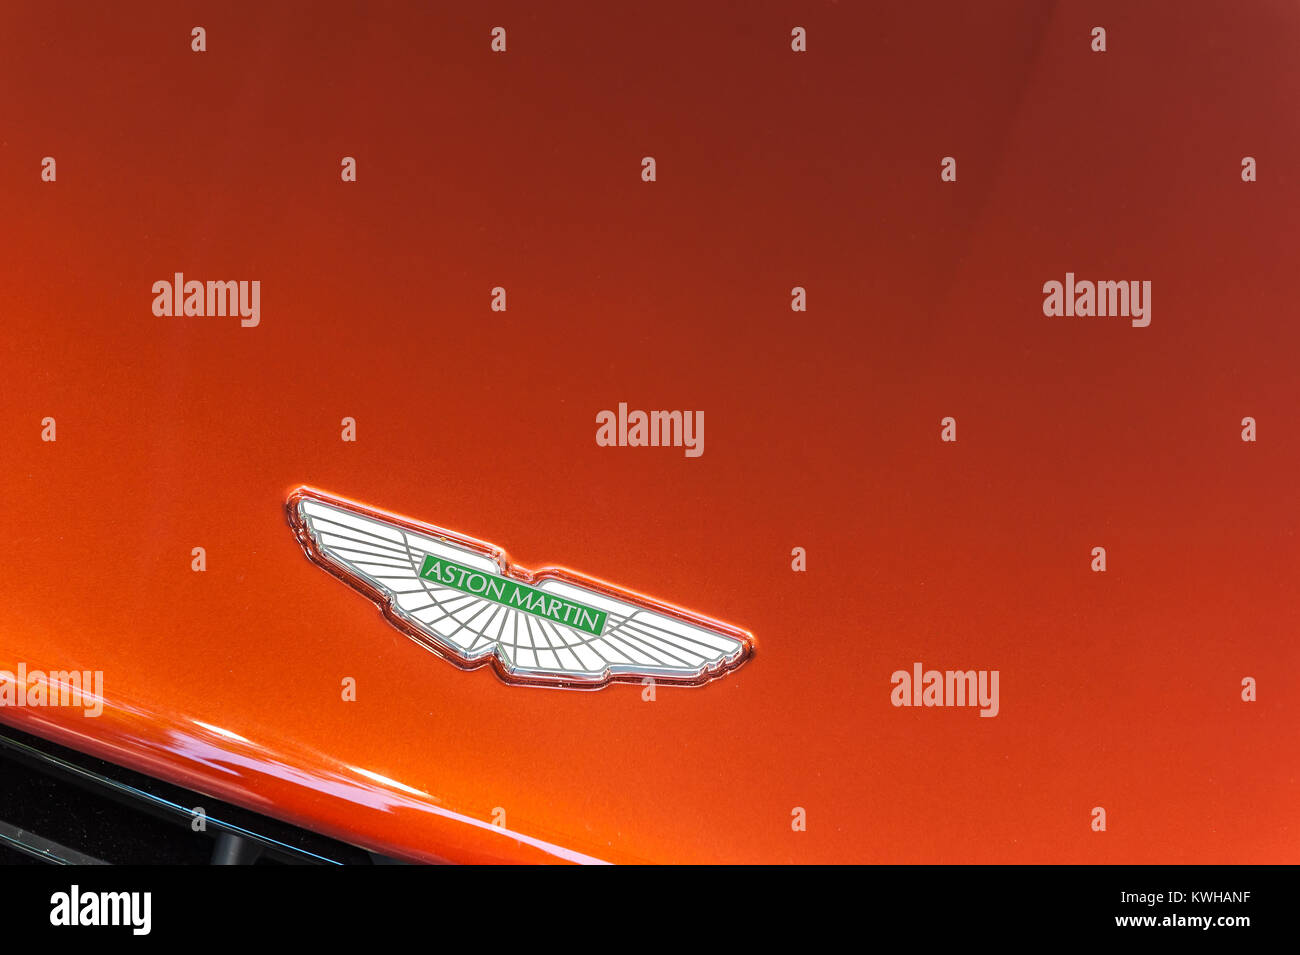 TORINO - JUN 08, 2017: Showroom. Close up of an hood and logo of a Aston Martin Stock Photo